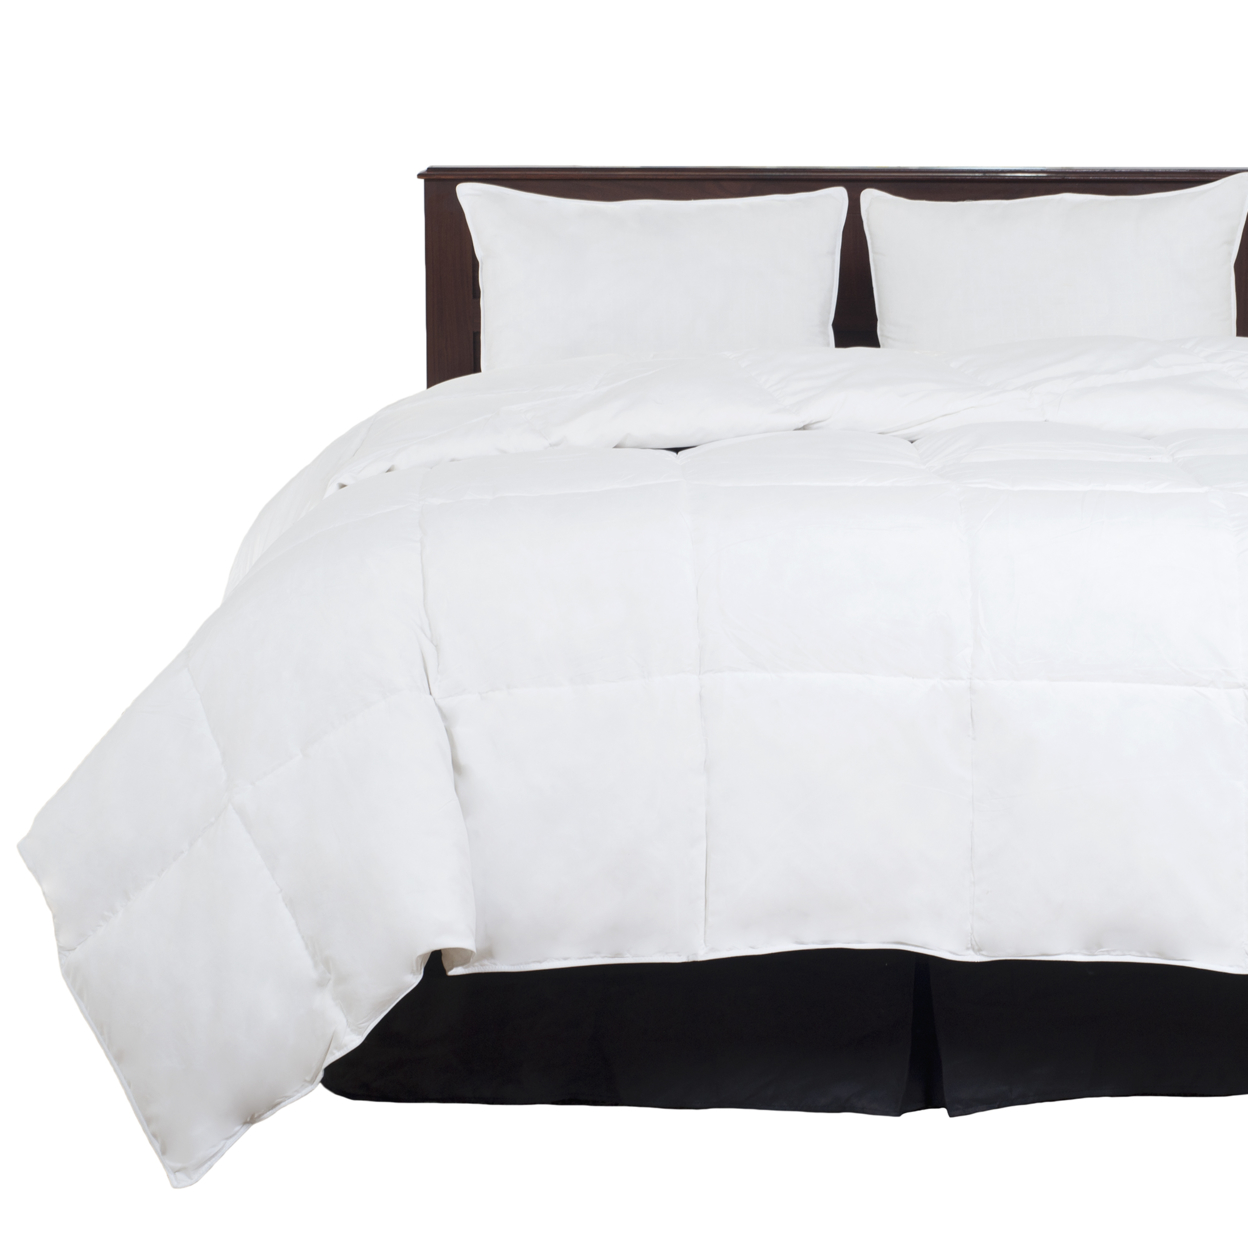 Lavish Home Down Alternative Overfilled Bedding Comforter - Full/Queen